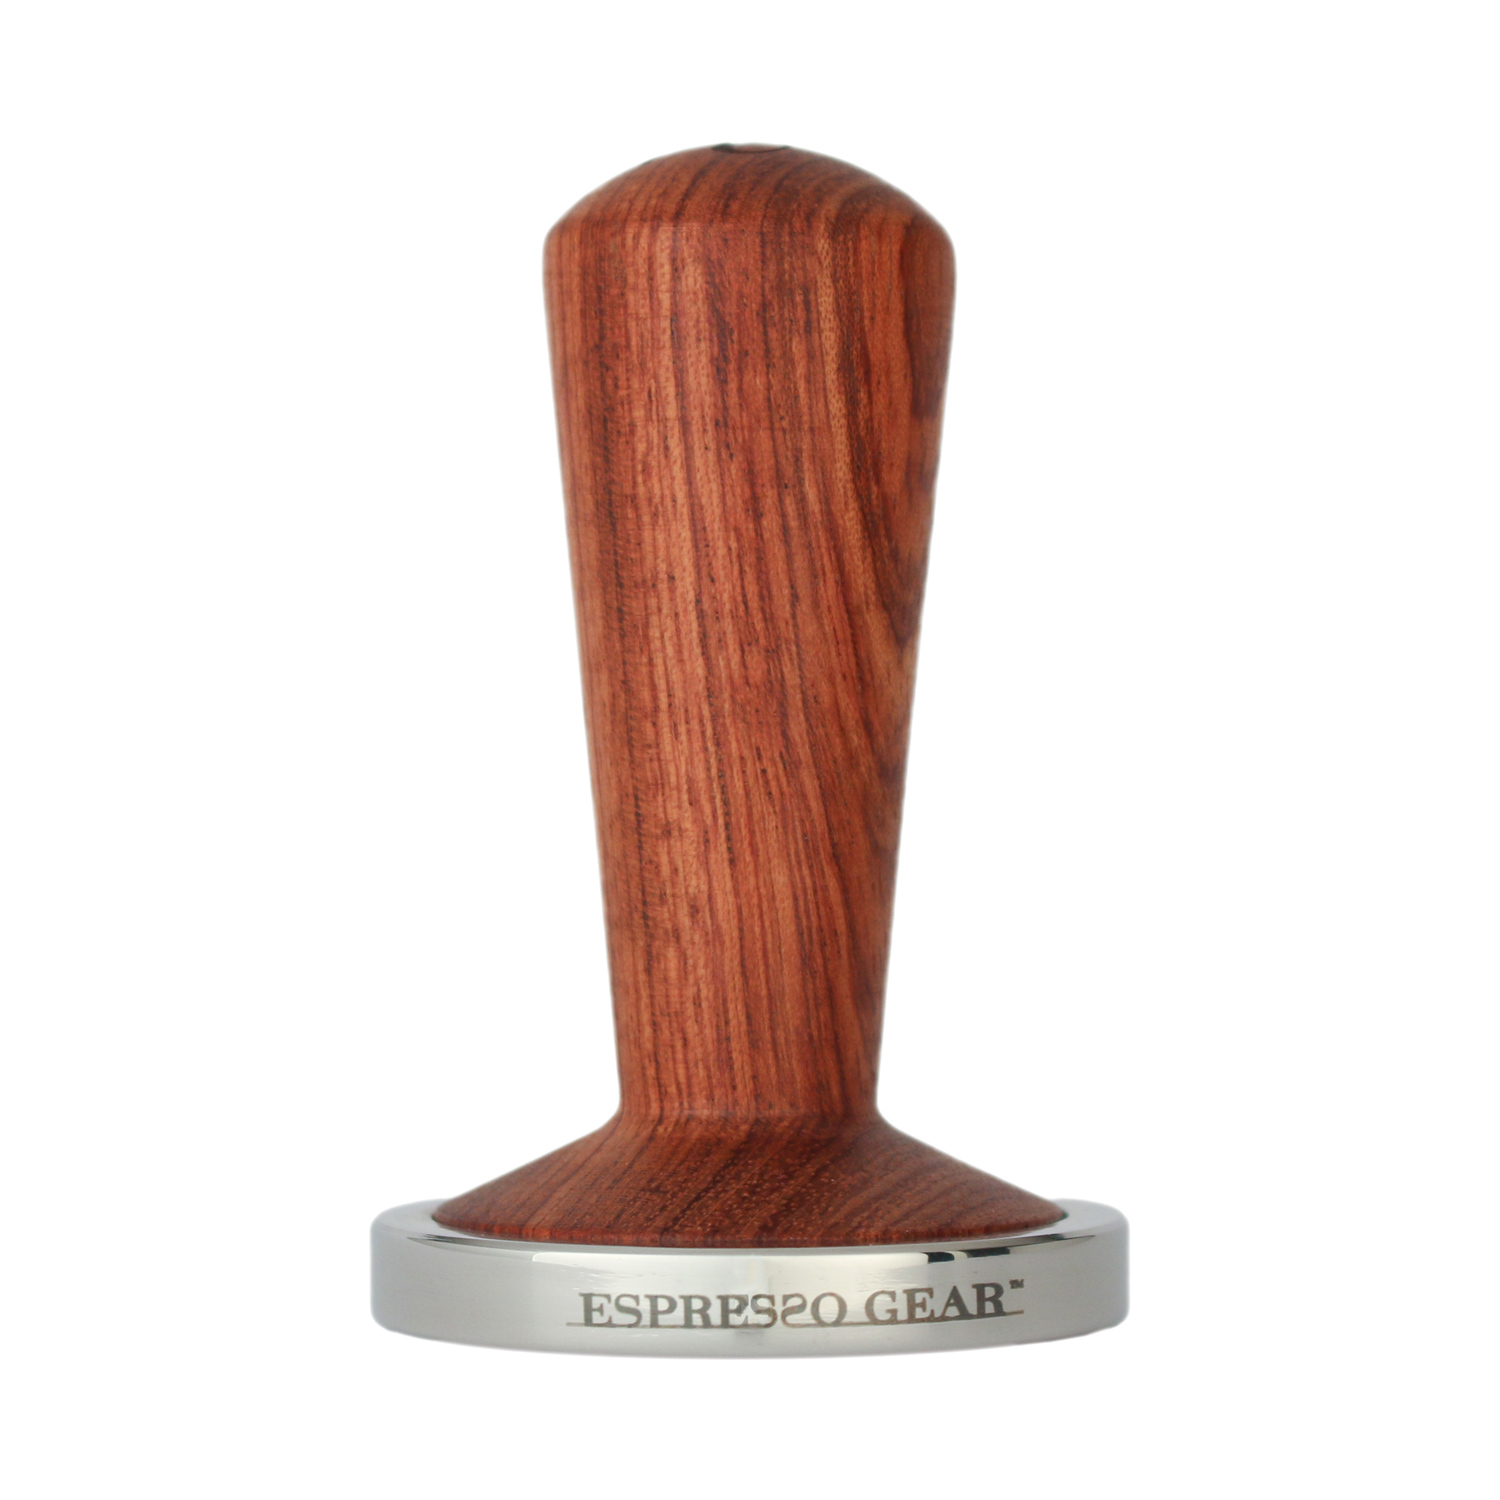 Espresso Gear - Luce Rosewood Tamper 57mm